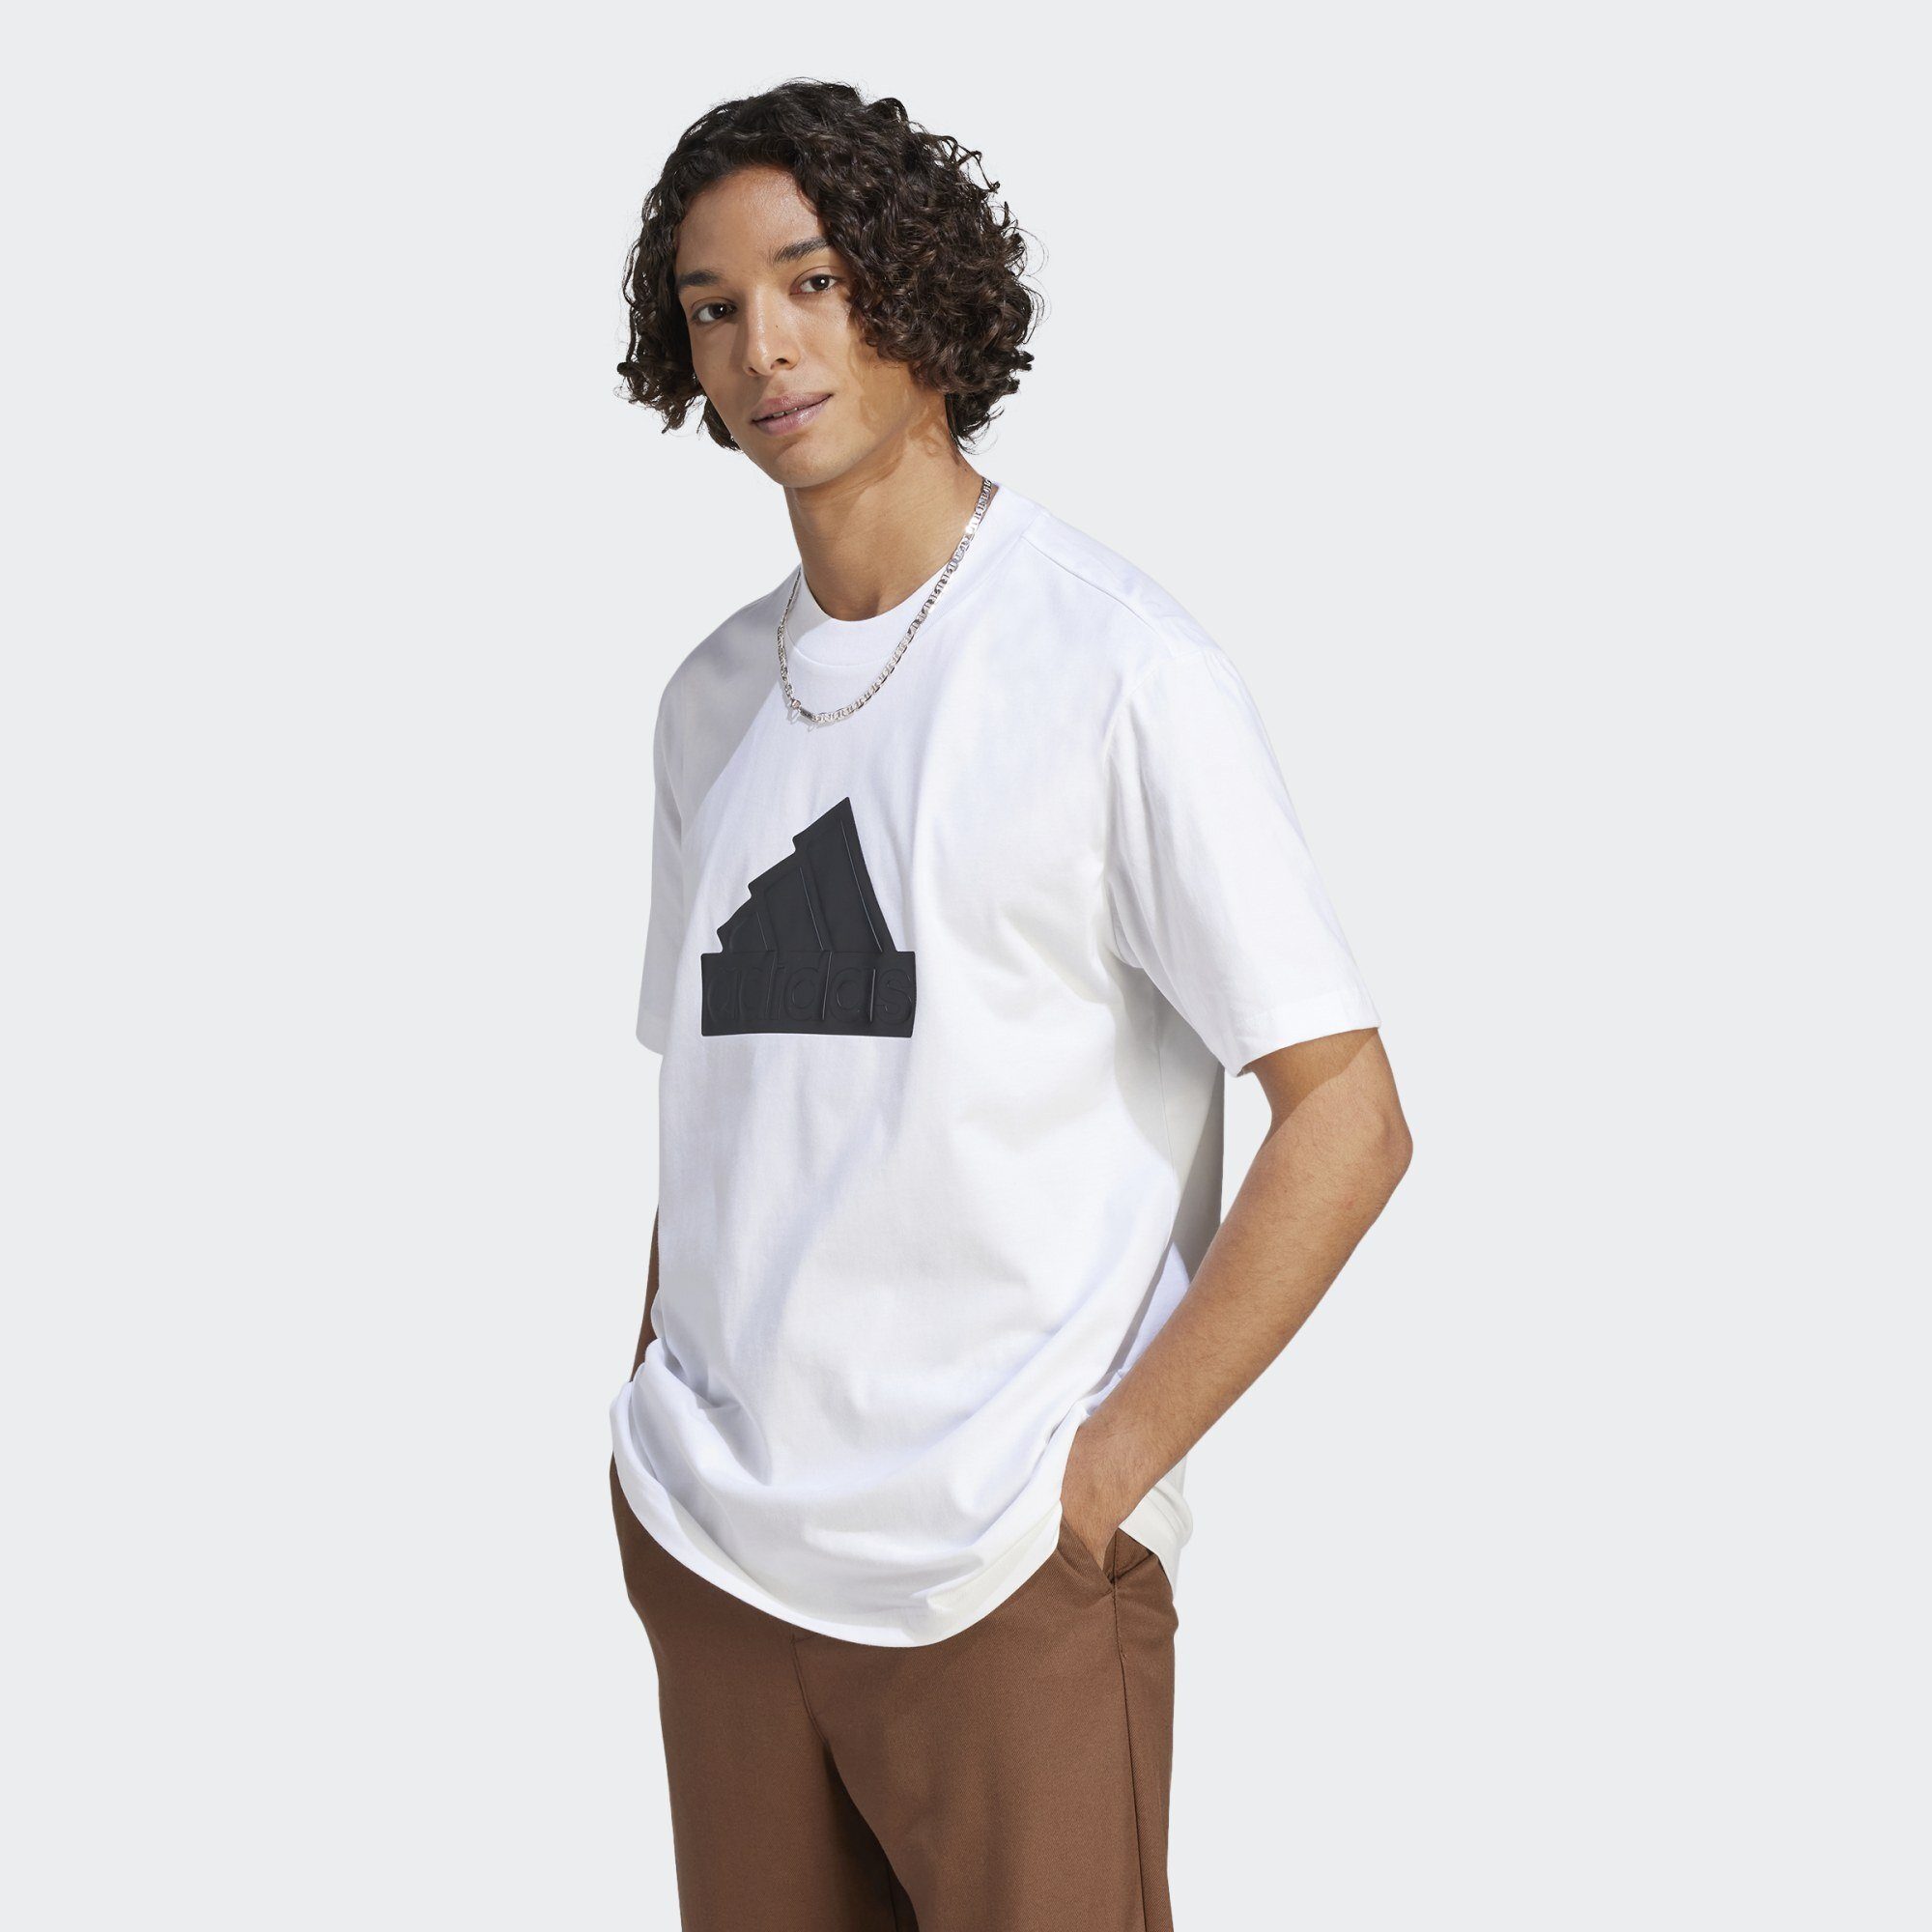 SPORT FUTURE Black BOMBER T-SHIRT / OF T-Shirt Sportswear BADGE ICONS White adidas